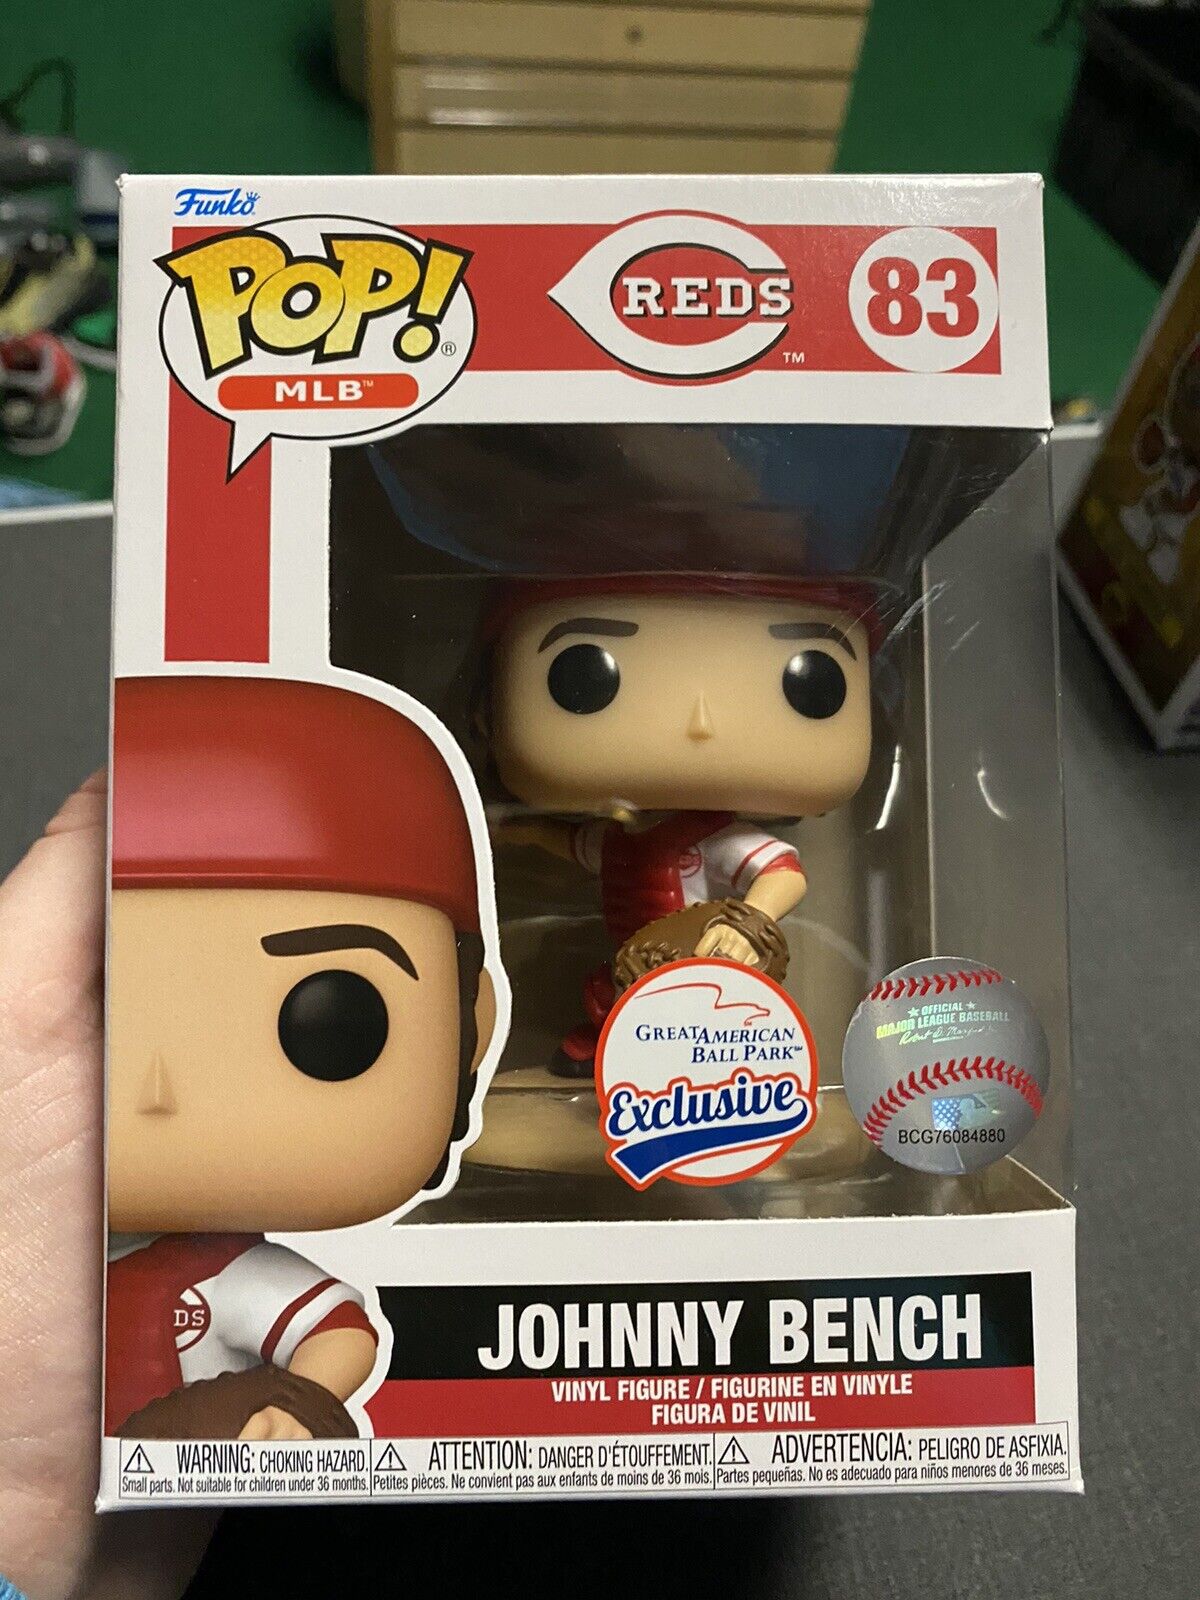 NEW Johnny Bench Cincinnati Reds Funko Pop Figure #83, brand new in box